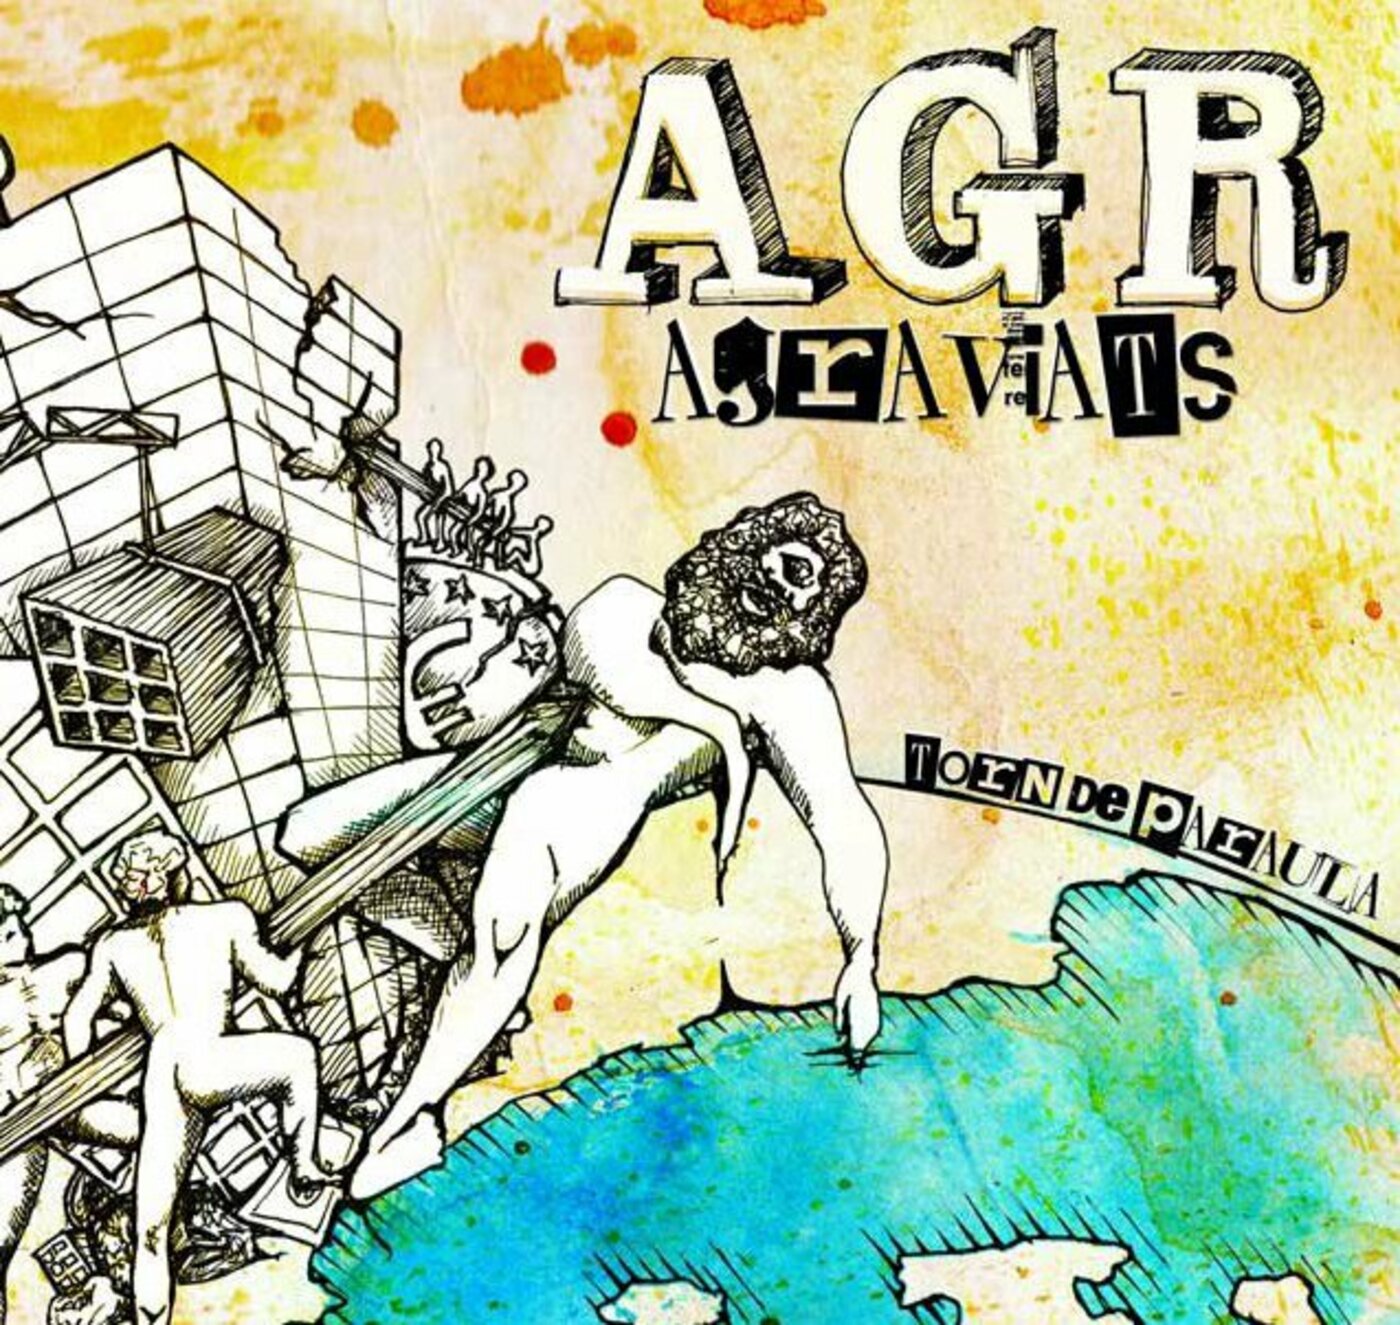 Agraviats - Torn de paraula | musica en valencià